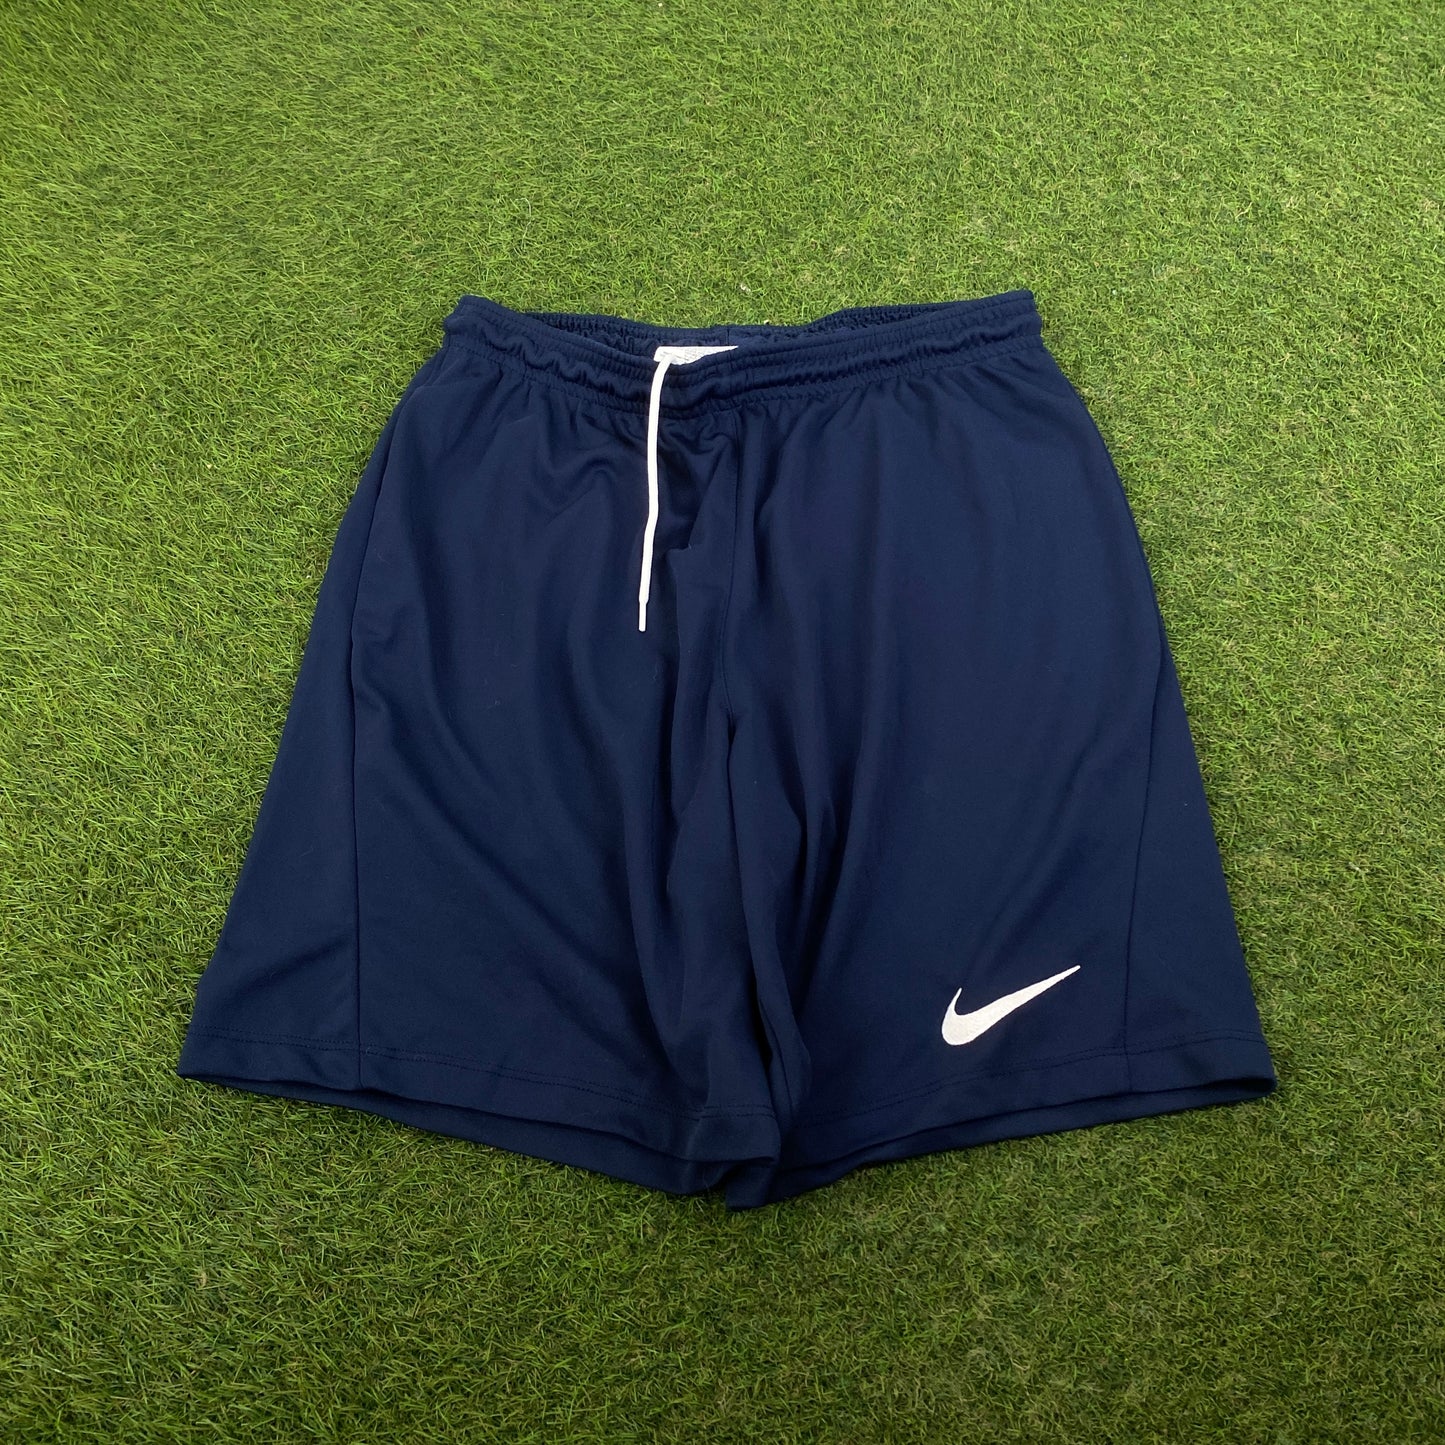 00s Nike Dri-Fit Football Shorts Blue Medium